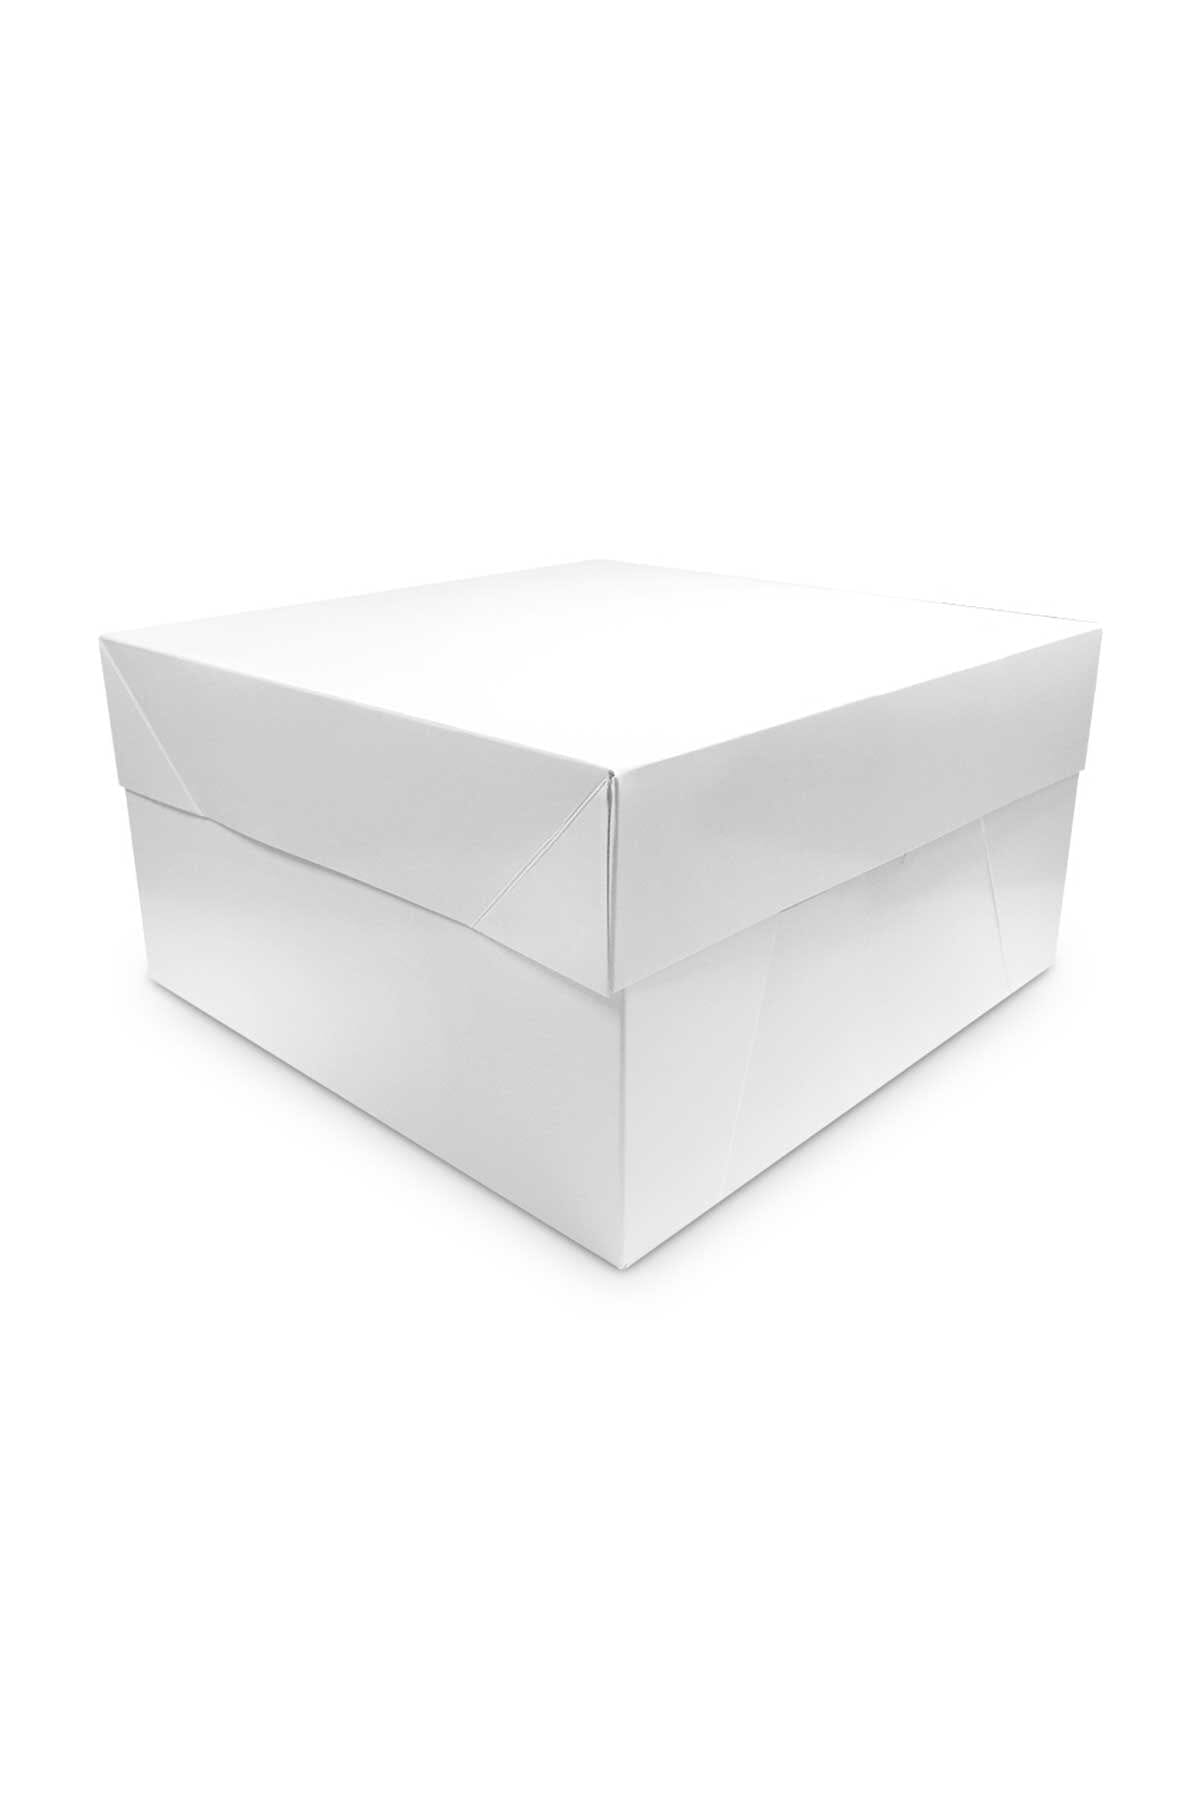 Single White Cake Box & Lid Cake Box Sprinkly 